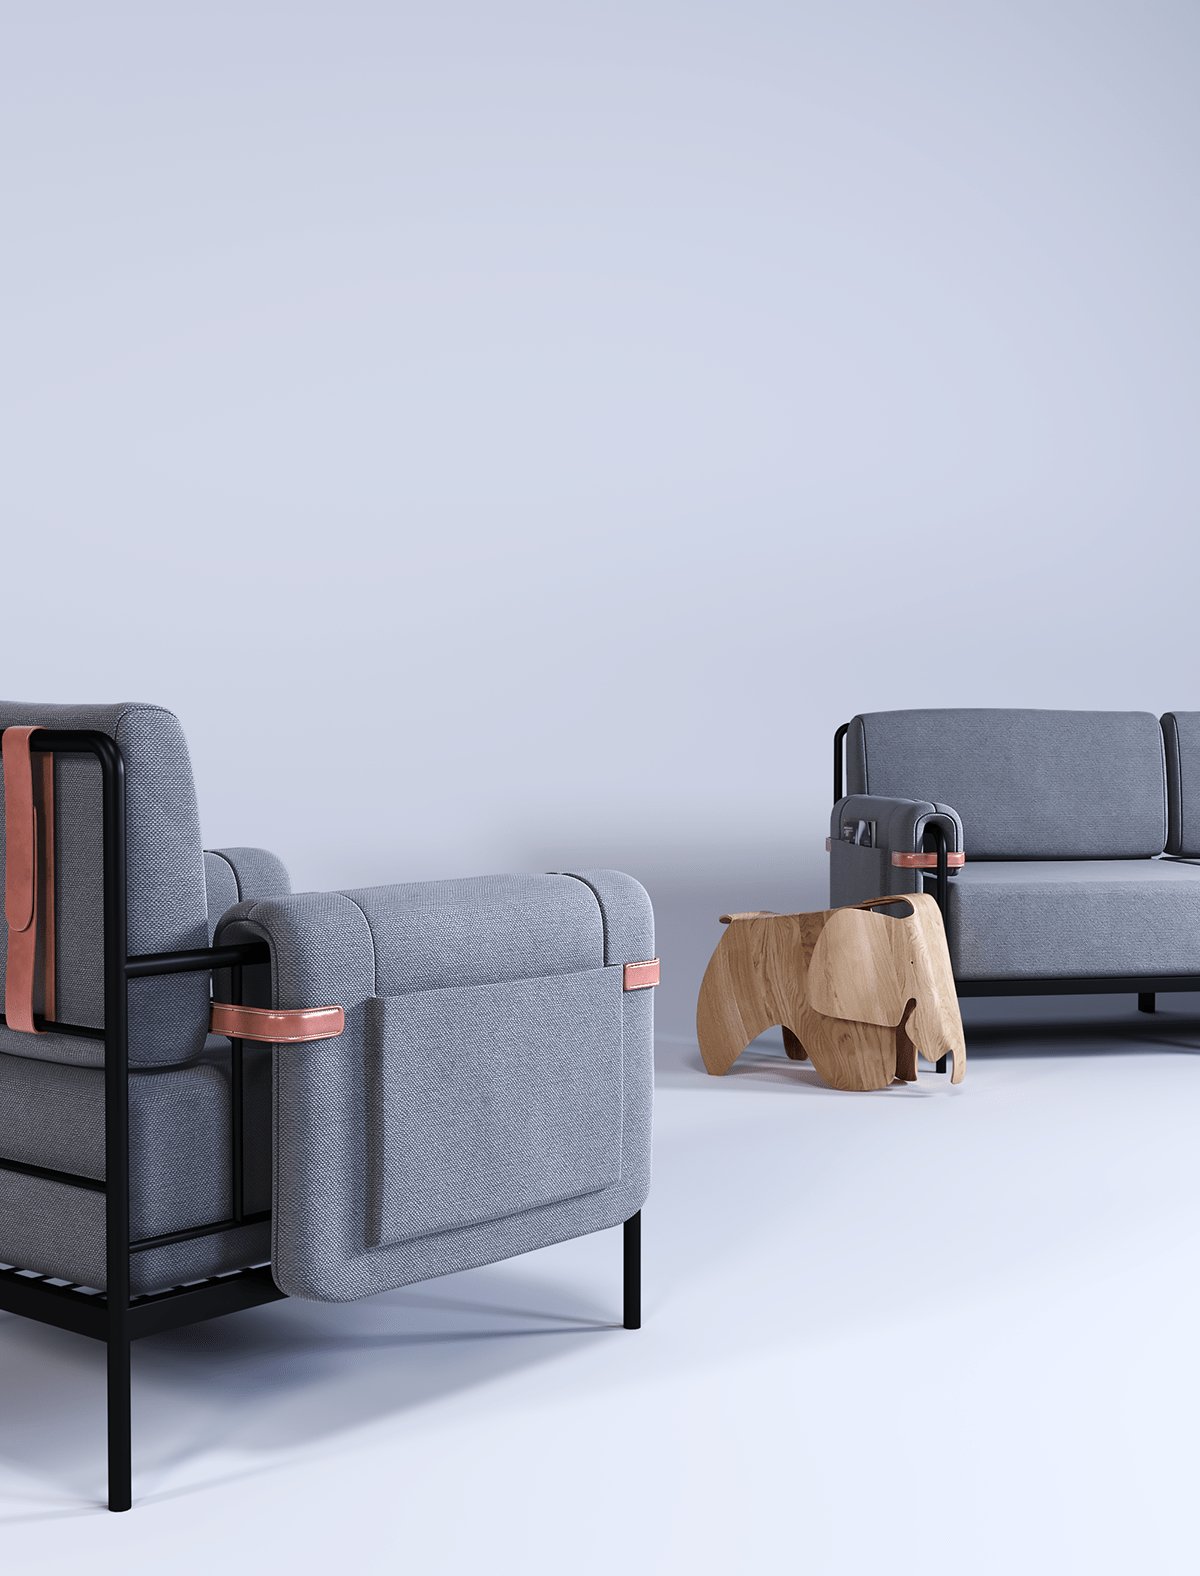 3D 3ds max archviz CGI chair furniture interior design  product Render visualization